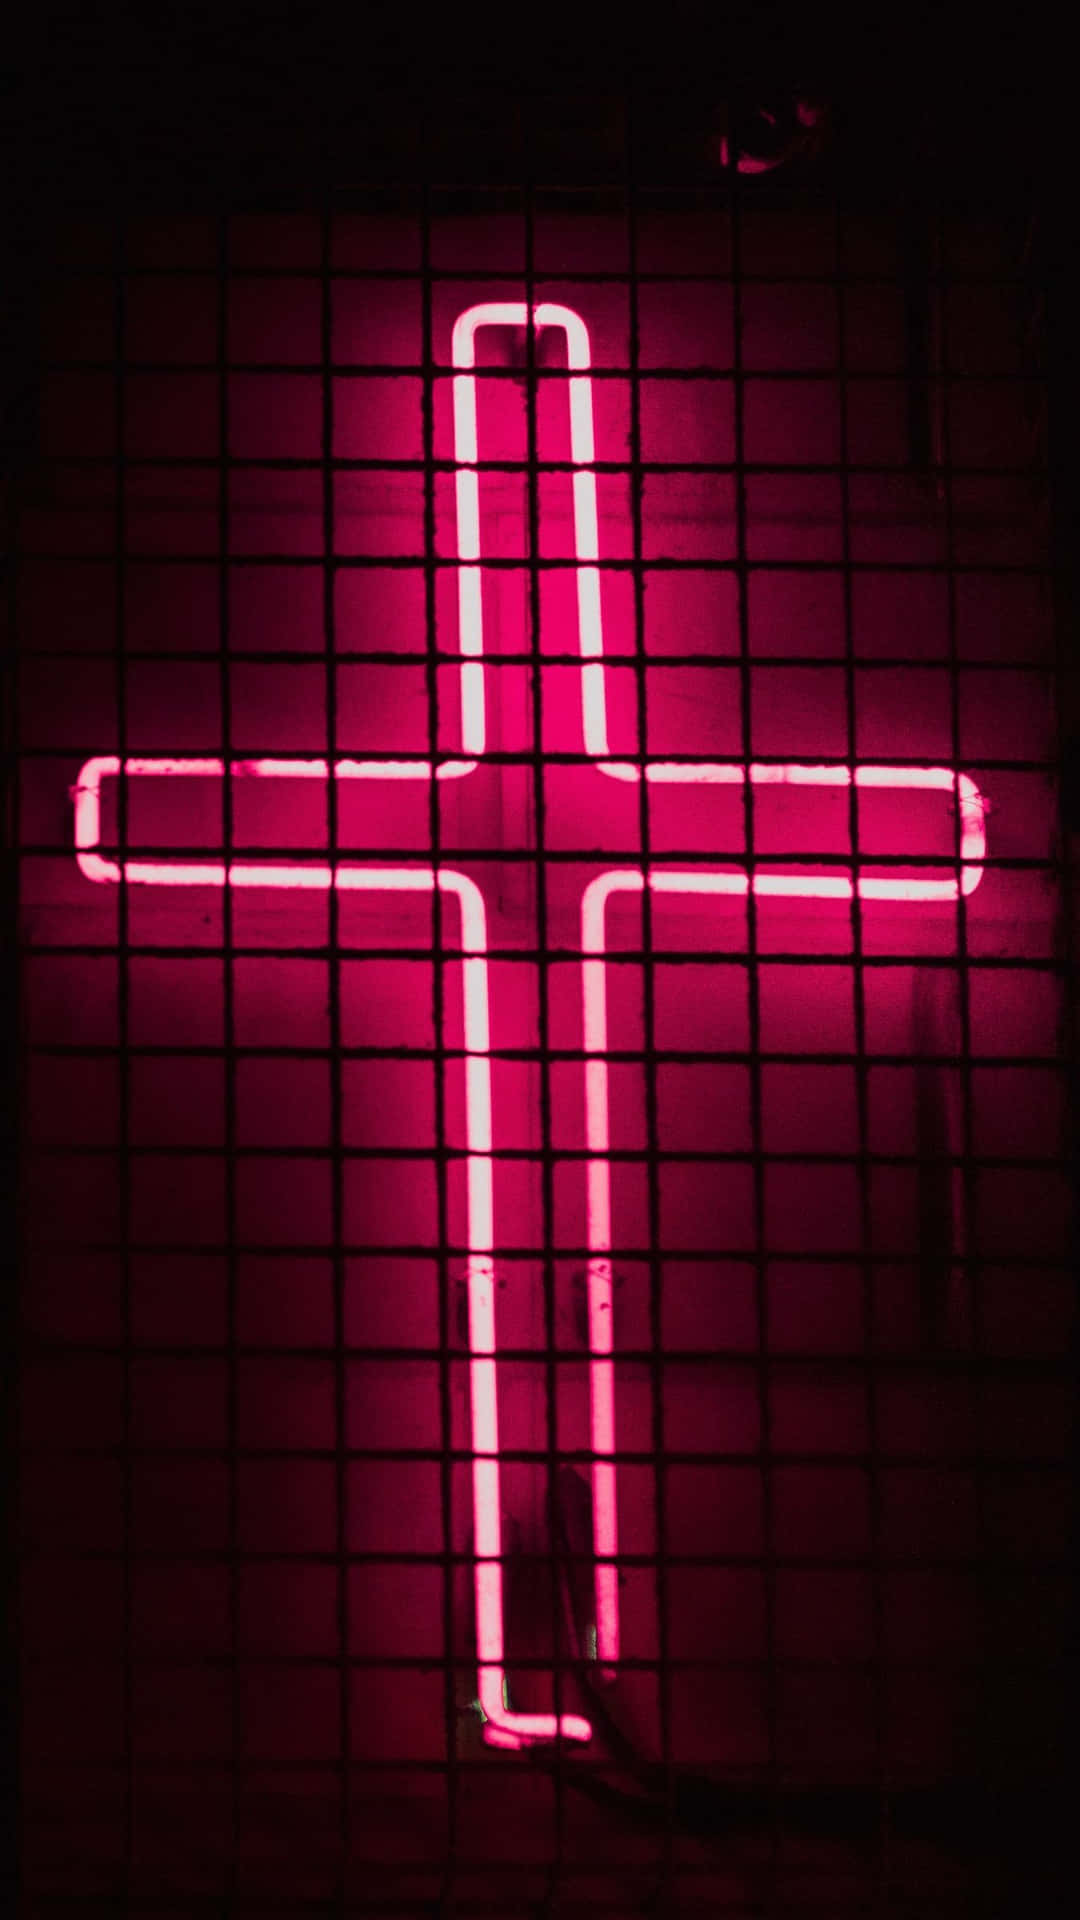 Papel De Parede Glowing Neon Rosa Cruz Do Iphone. Papel de Parede